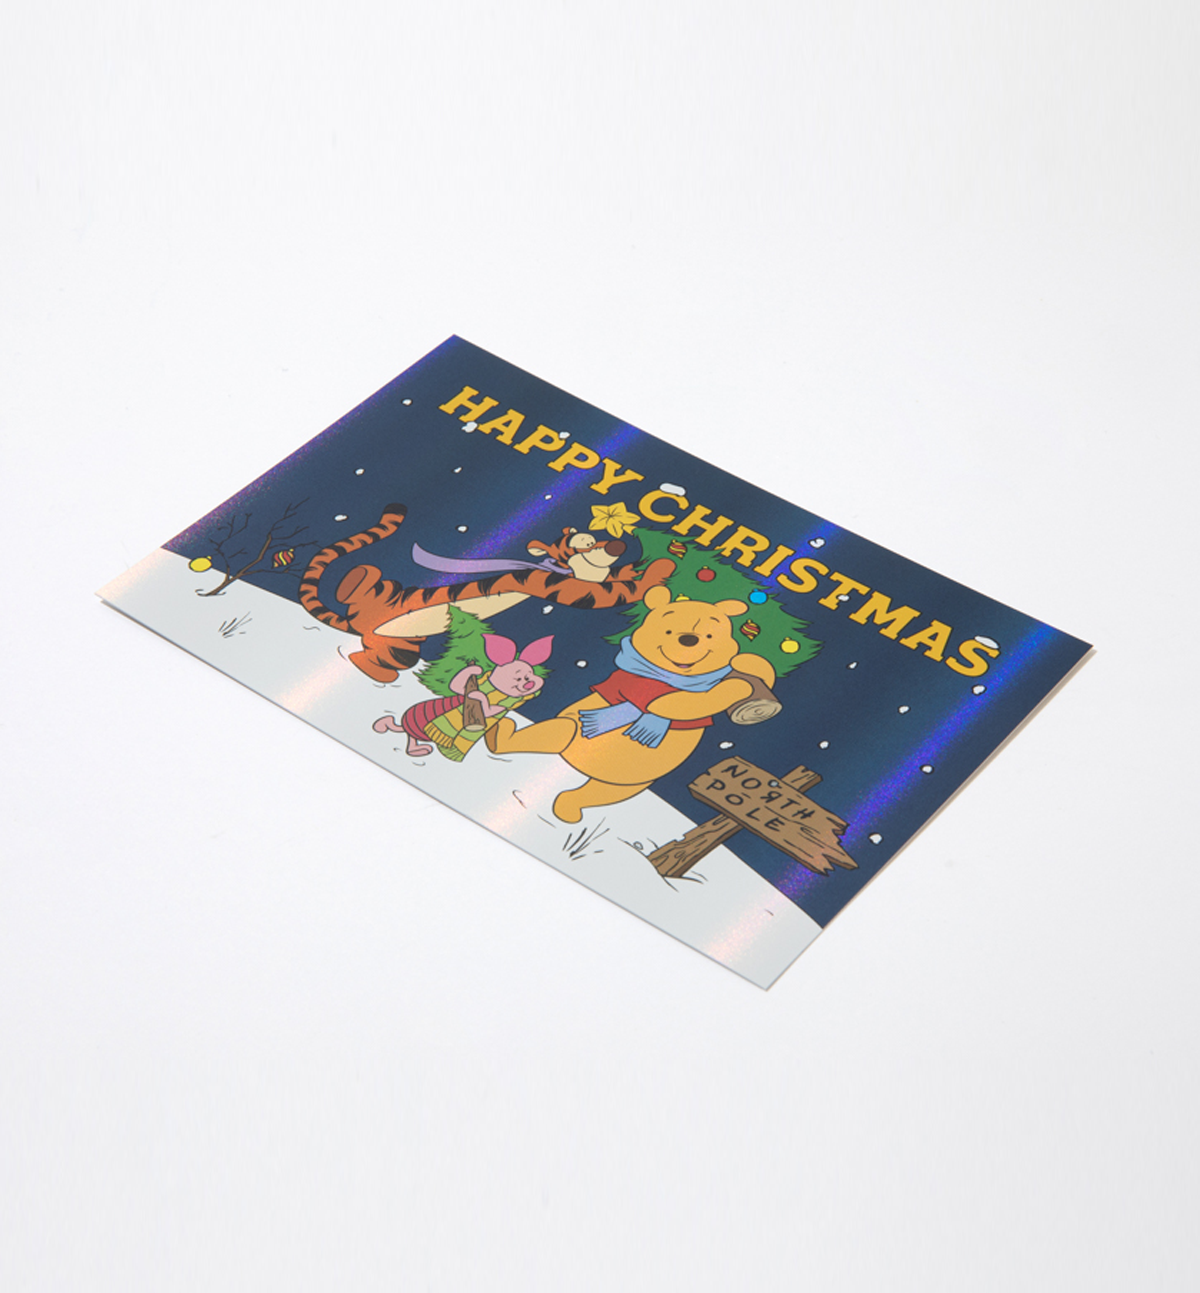 Winnie The Pooh Christmas Hologram Postcard